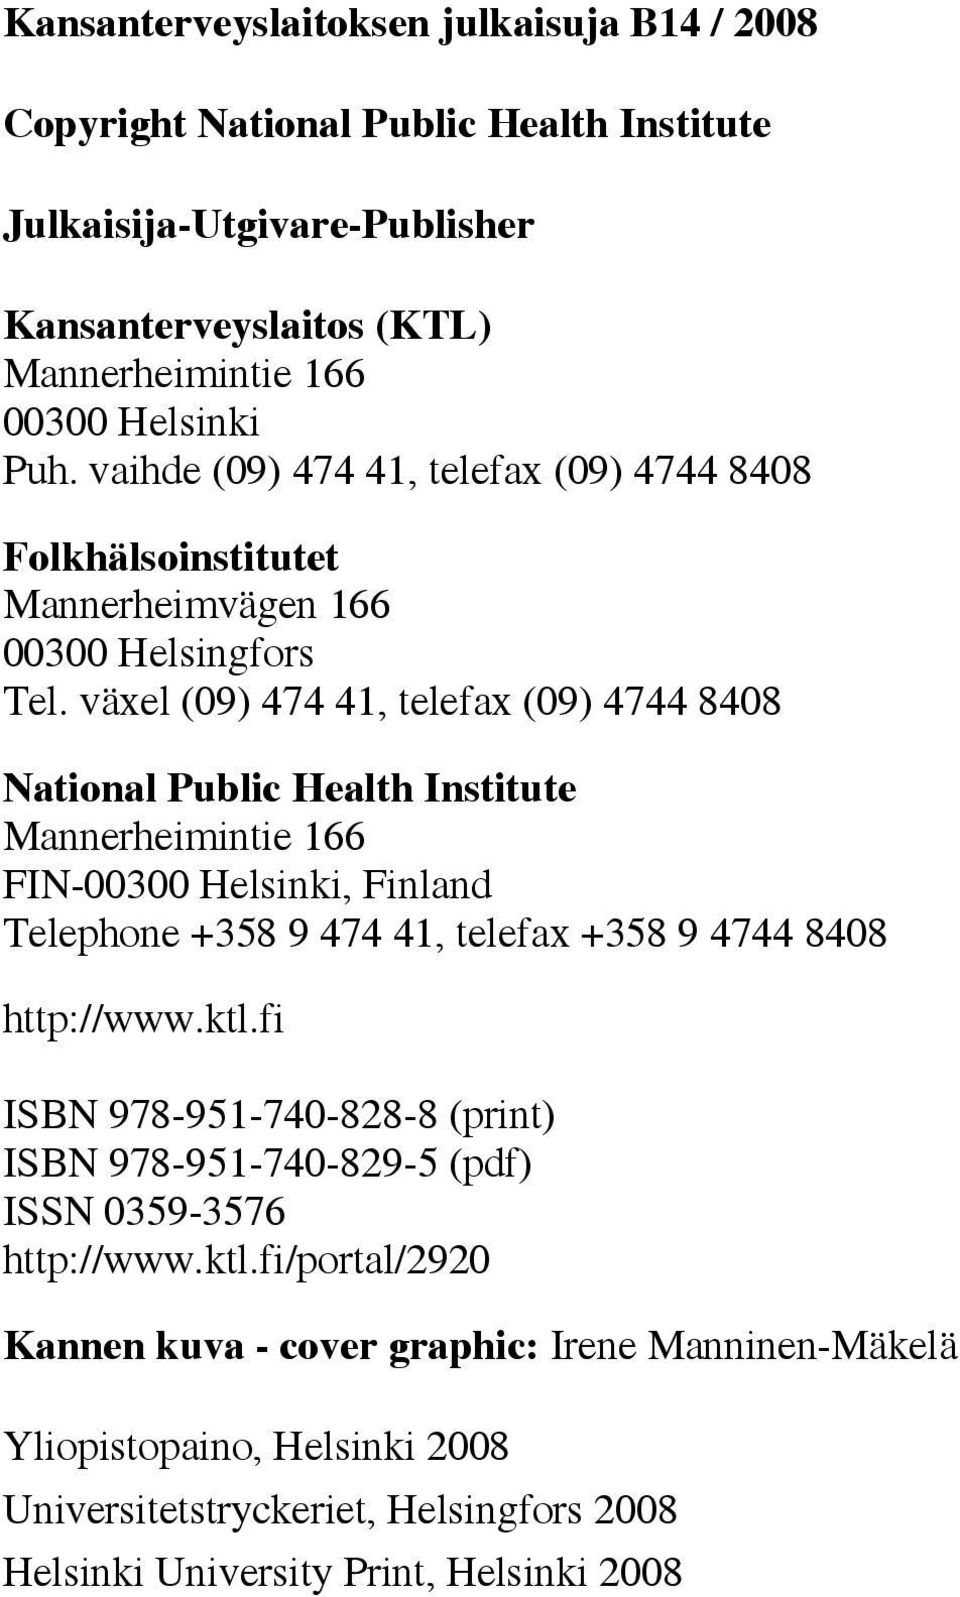 växel (09) 474 41, telefax (09) 4744 8408 National Public Health Institute Mannerheimintie 166 FIN-00300 Helsinki, Finland Telephone +358 9 474 41, telefax +358 9 4744 8408 http://www.